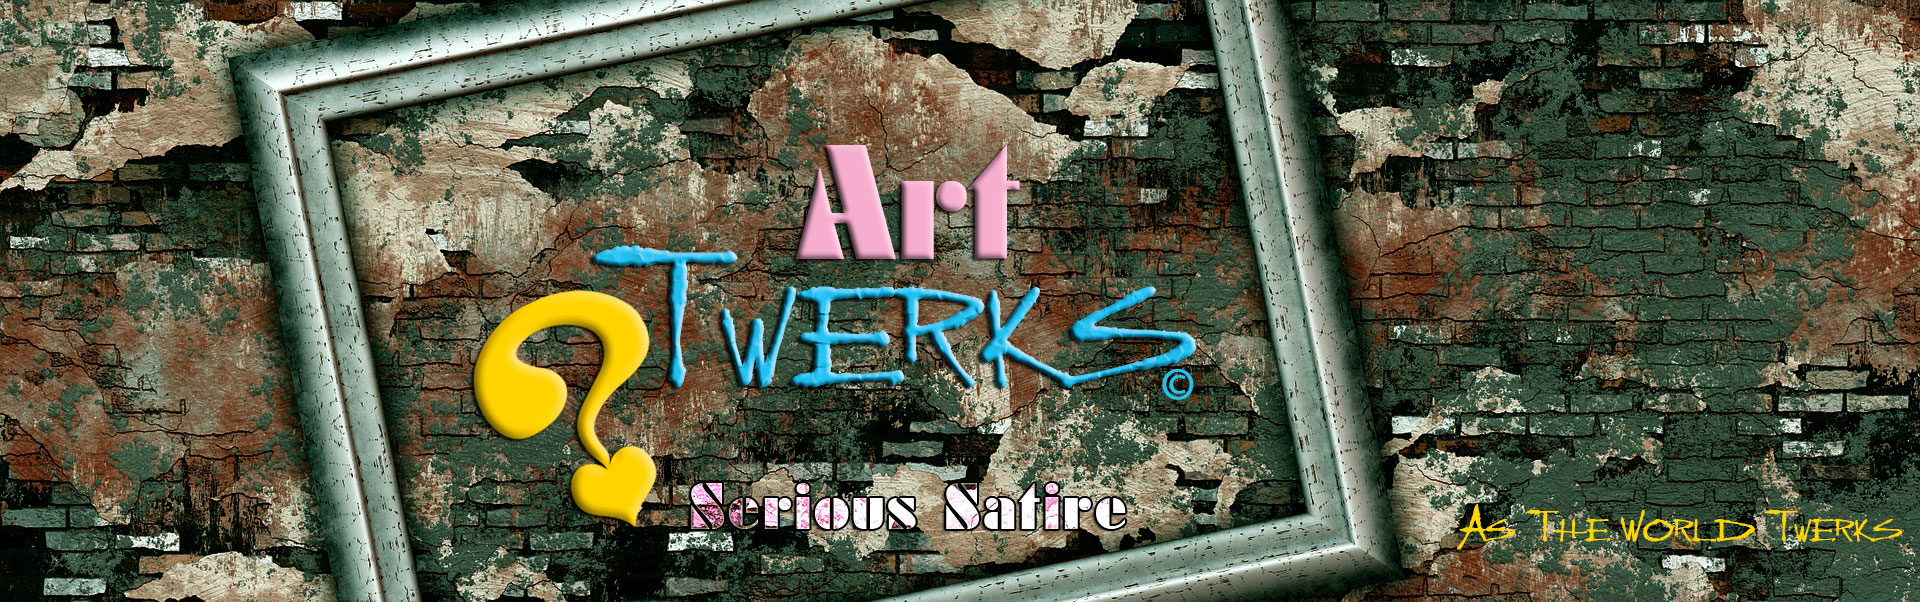 art-twerks-logo-banner-masthead